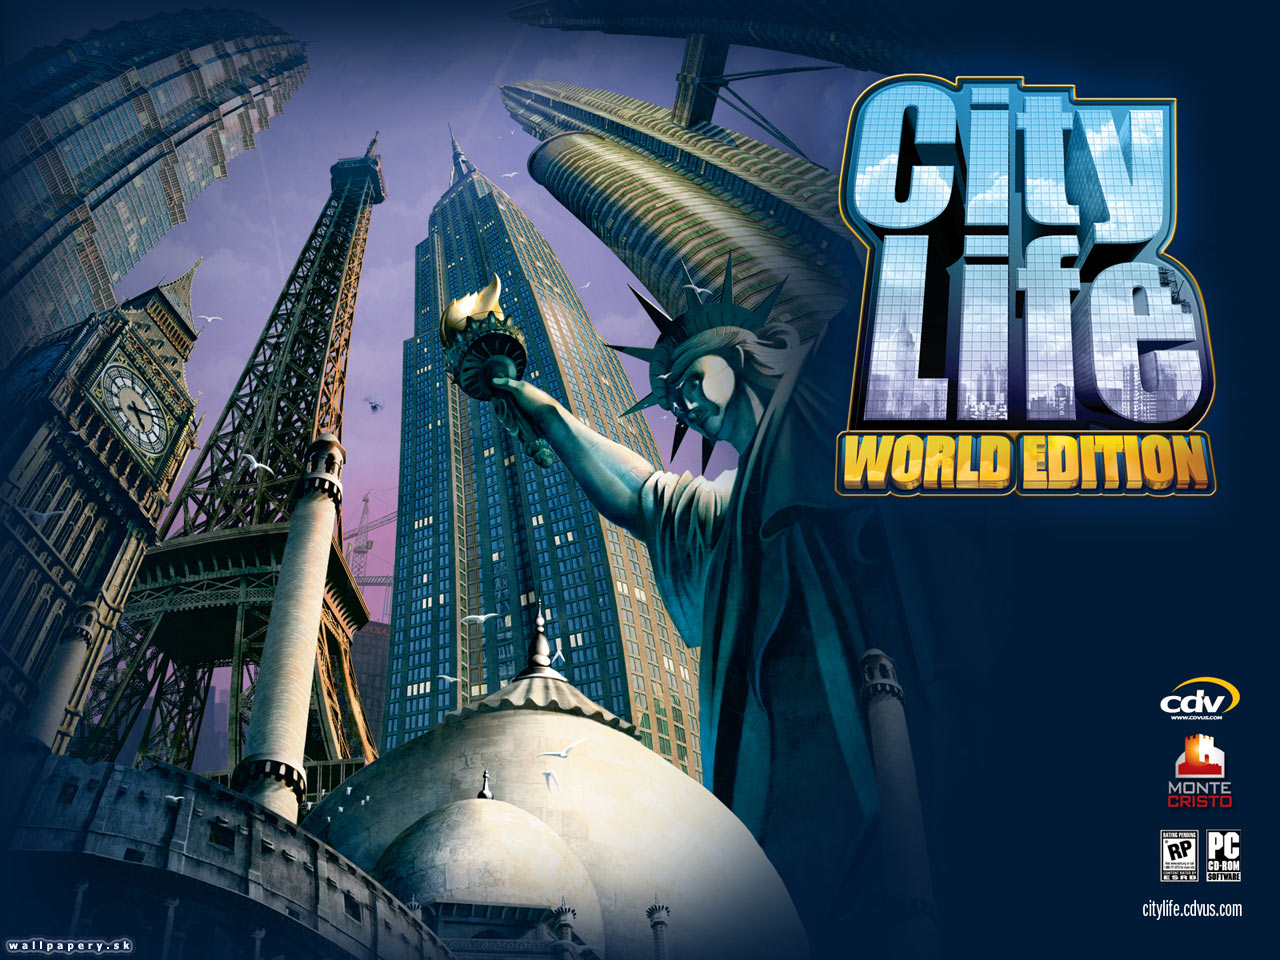 City Life: World Edition - wallpaper 4